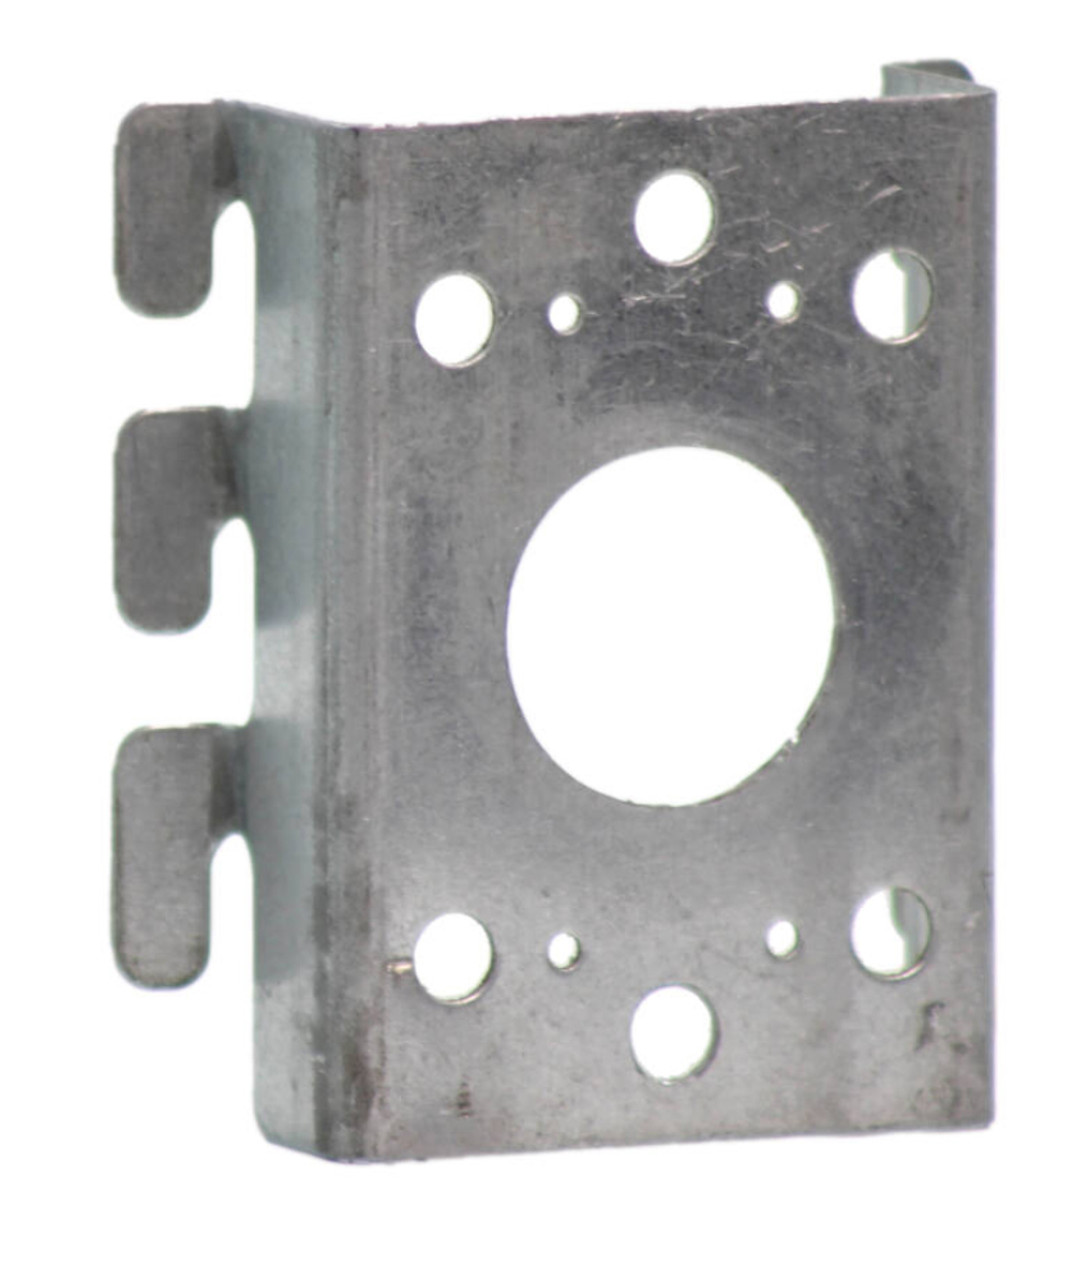 Eaton FTA075CC Flex Tray Connector Material: Steel Diameter: 1 INCH